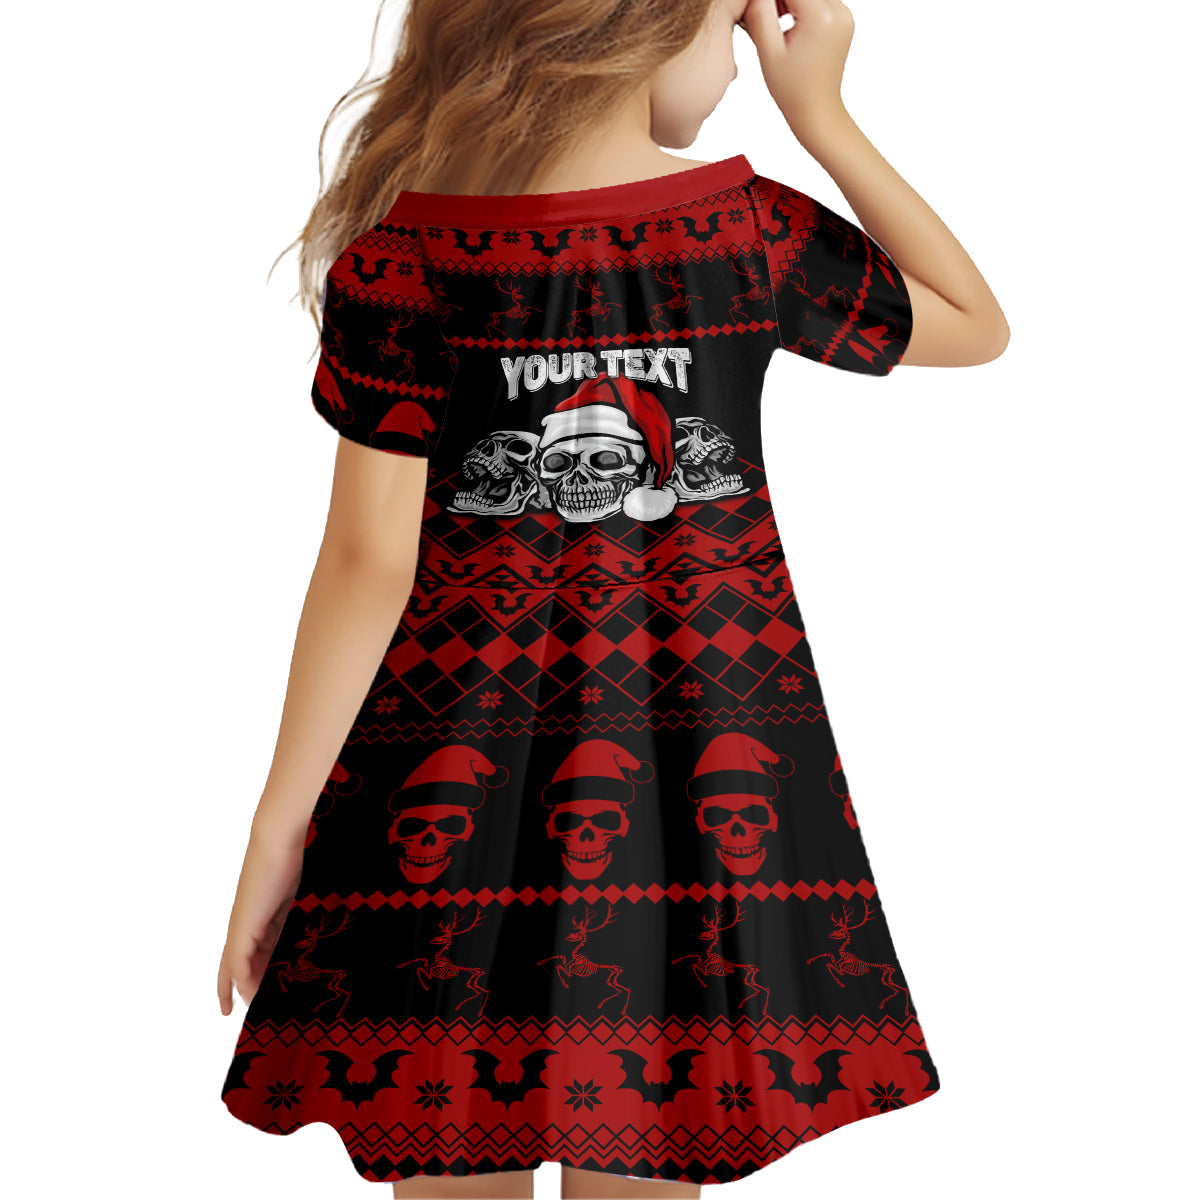 custom-christmas-family-matching-off-shoulder-maxi-dress-and-hawaiian-shirt-gothic-skull-creepmas